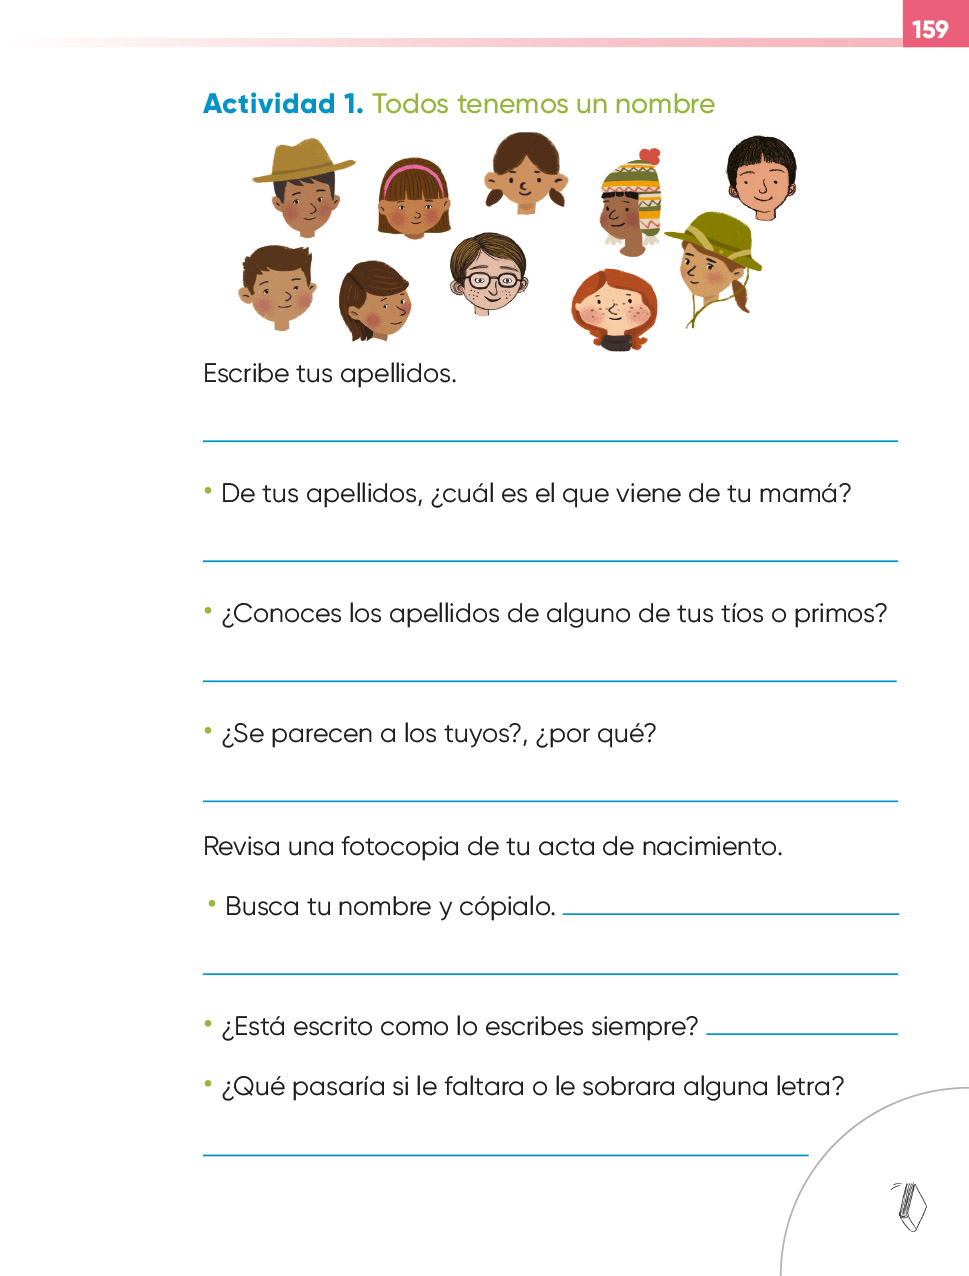 Lengua Materna Español Segundo Grado 2020 2021 Página 159 De 225 Libros De Texto Online 7653